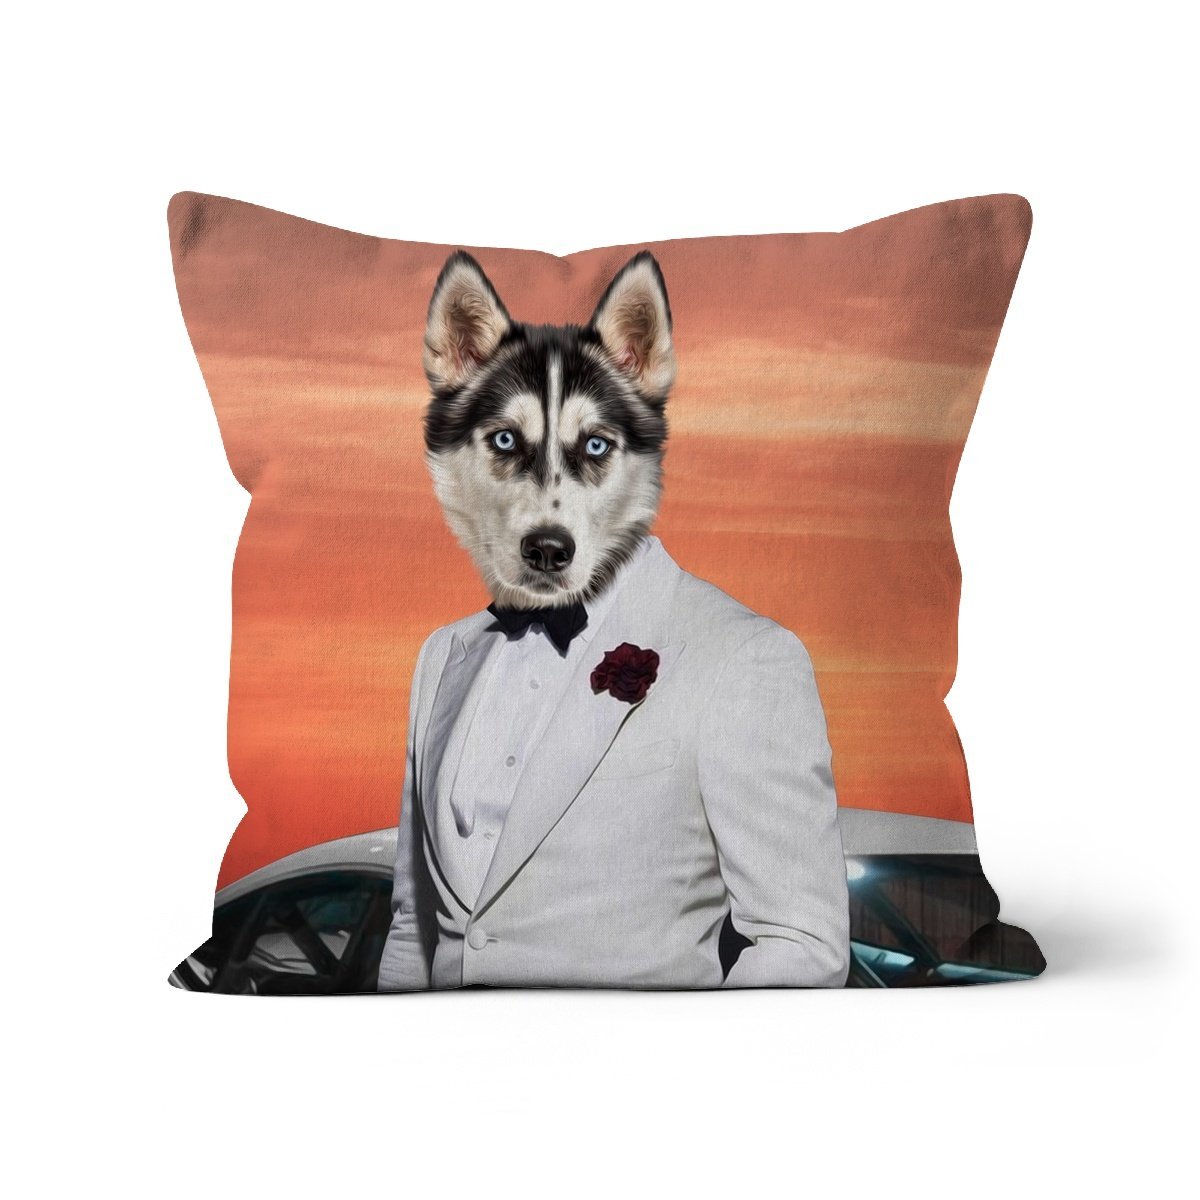 007 (James Bond Inspired): Custom Pet Cushion - Paw & Glory, pillow personalized, pet pillow, pillow custom, personalised dog pillows, personalised pet pillows